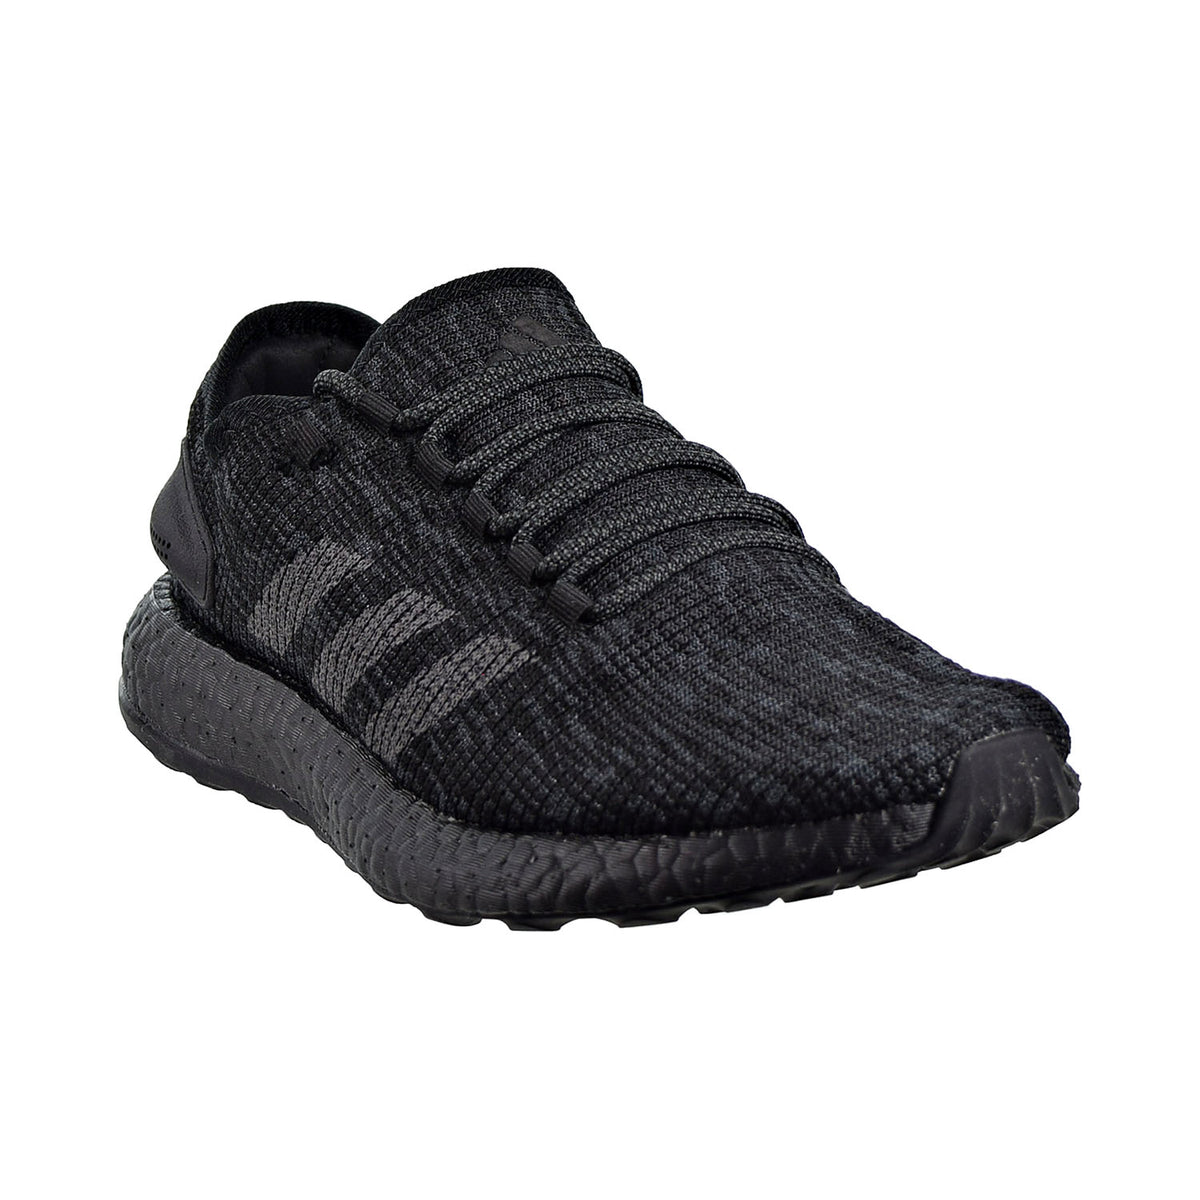 Adidas "Triple Men's Running Shoes Black/Dark Grey